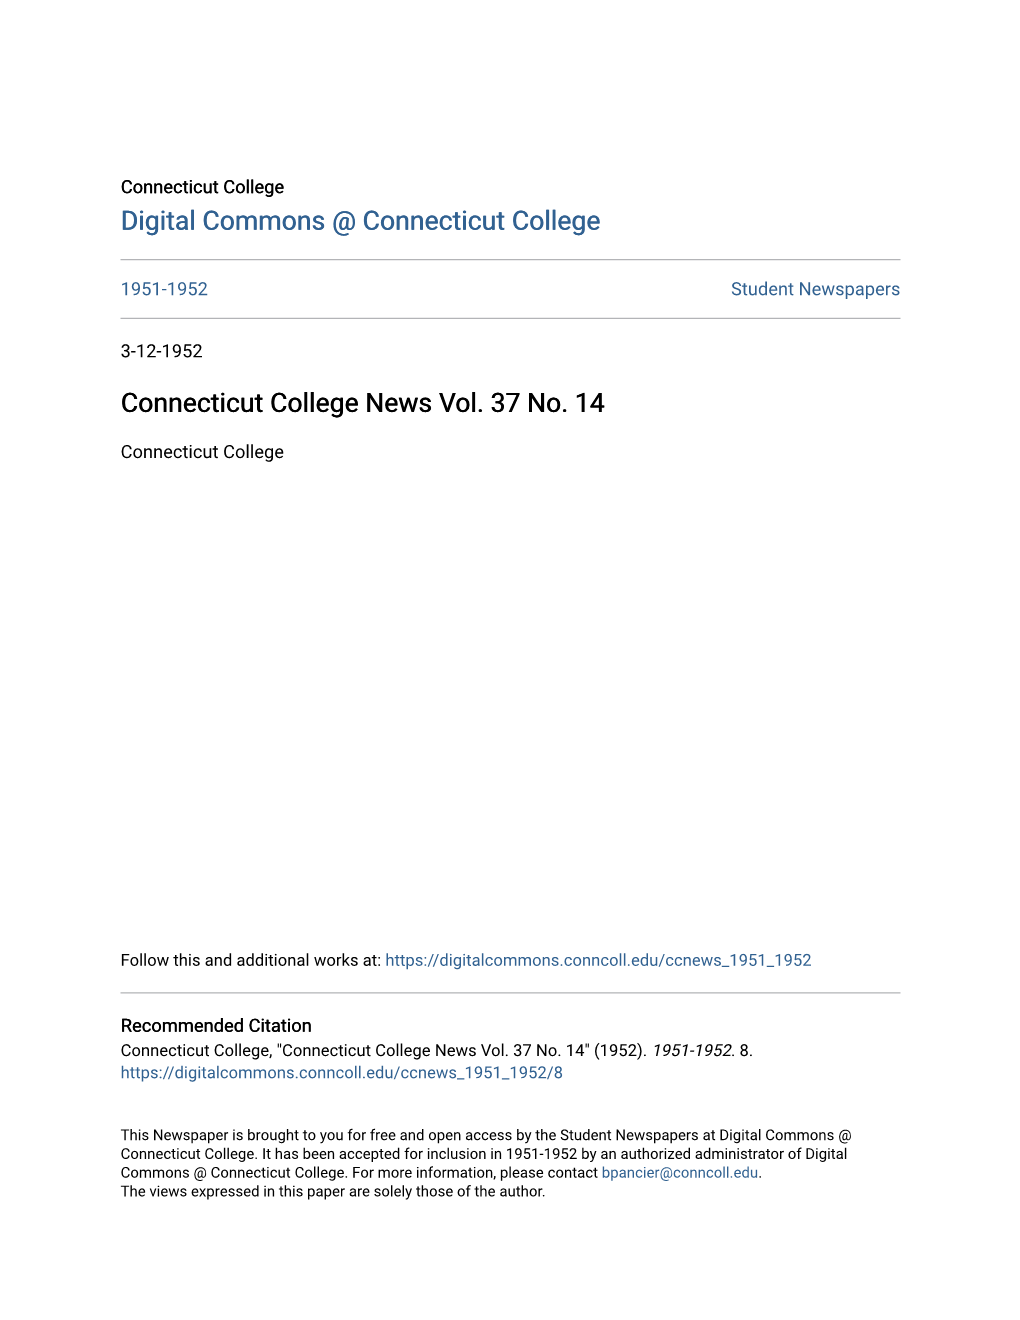 Connecticut College News Vol. 37 No. 14